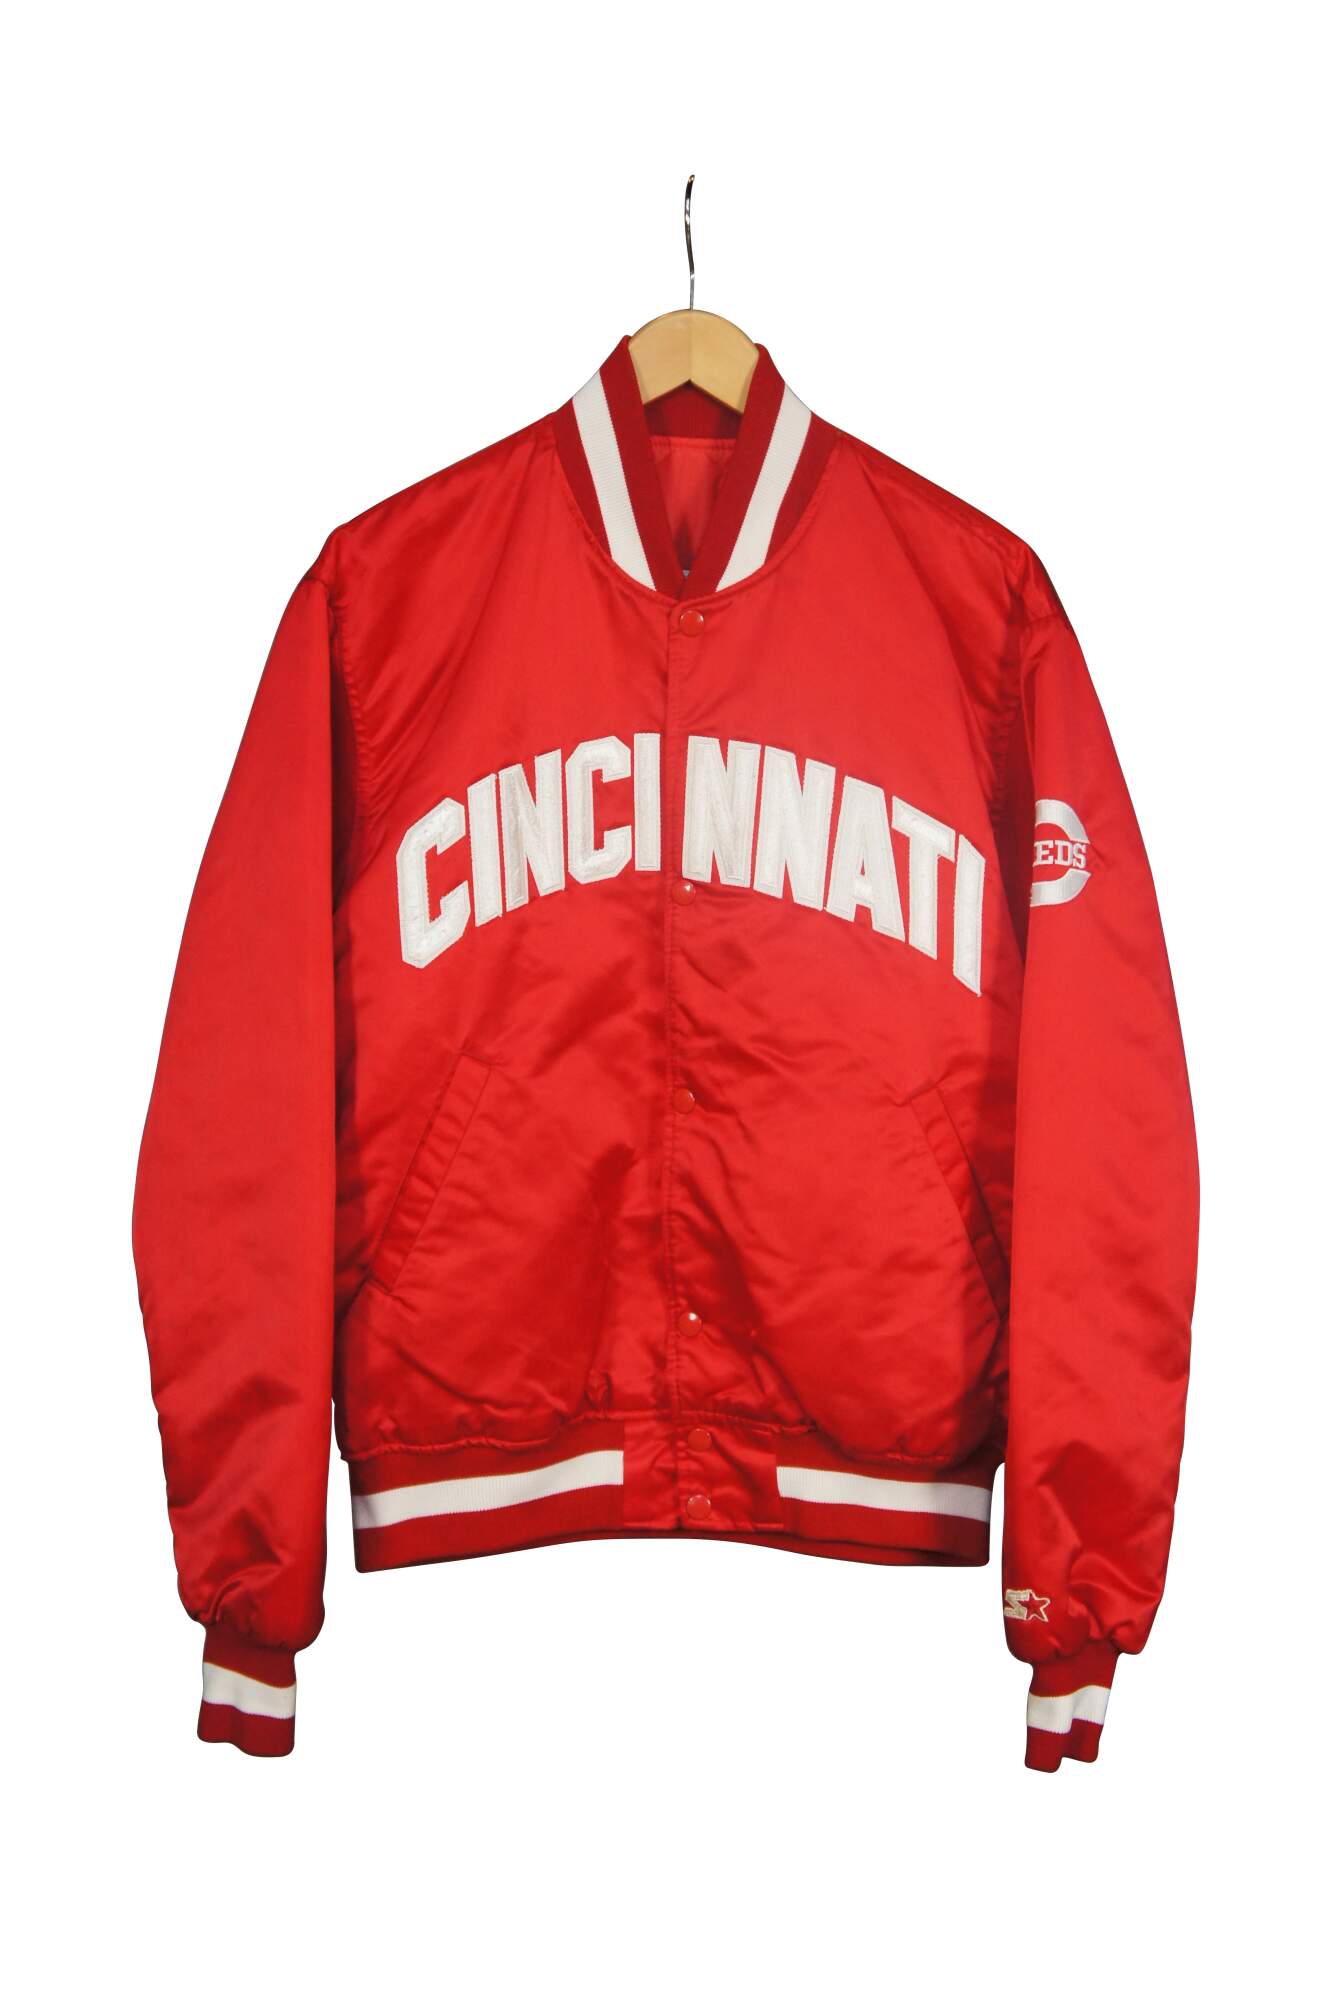 L) Vintage Starter Cincinnati Reds Jersey